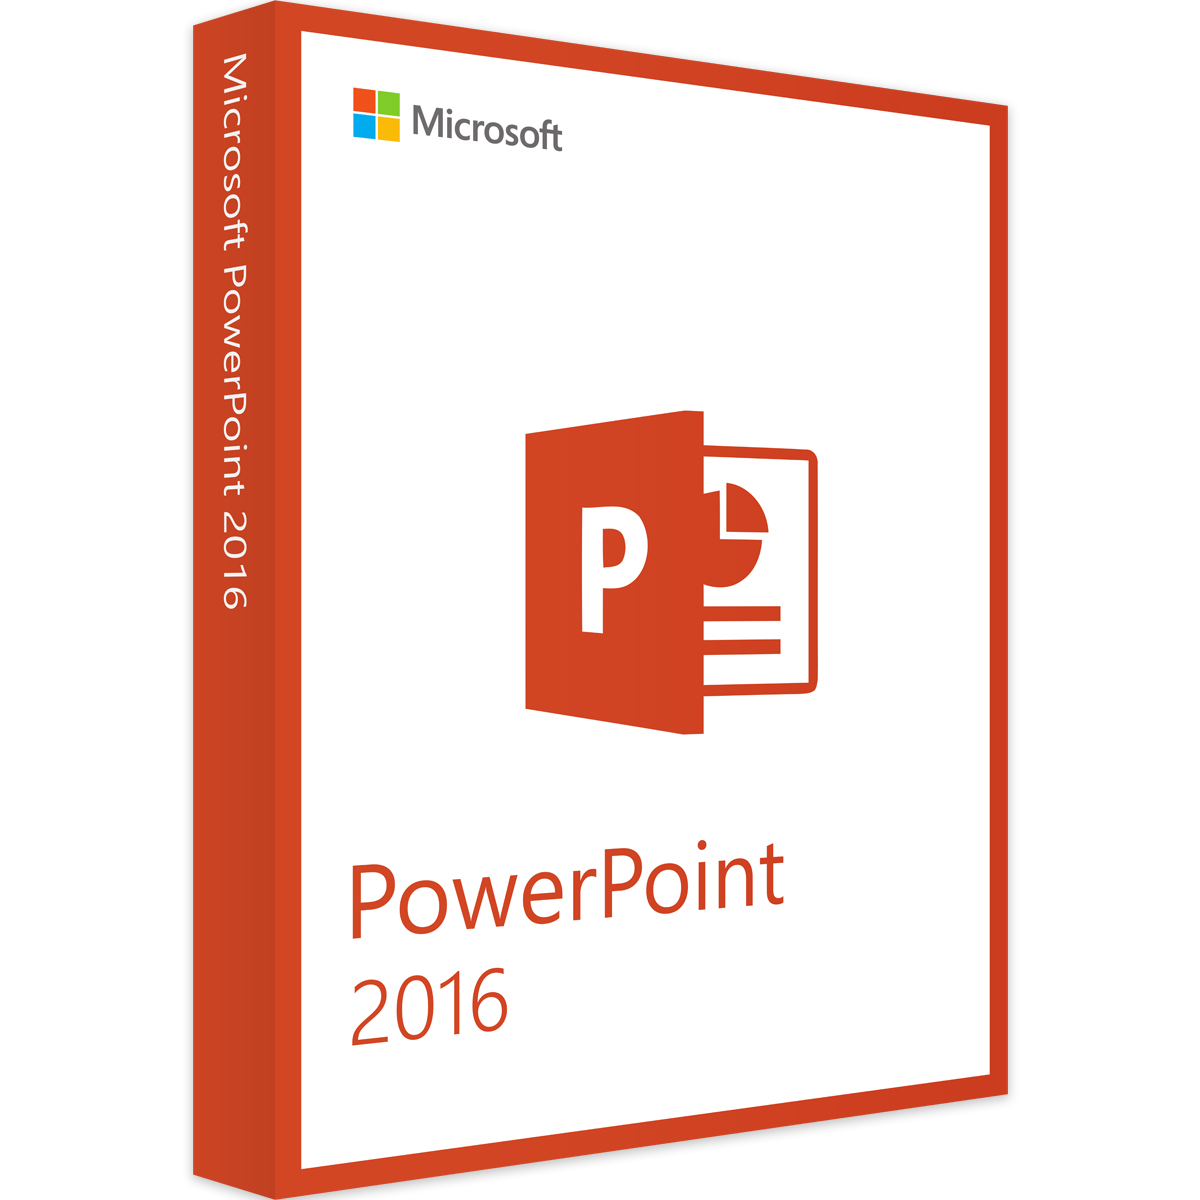 Microsoft powerpoint 2010 key generator